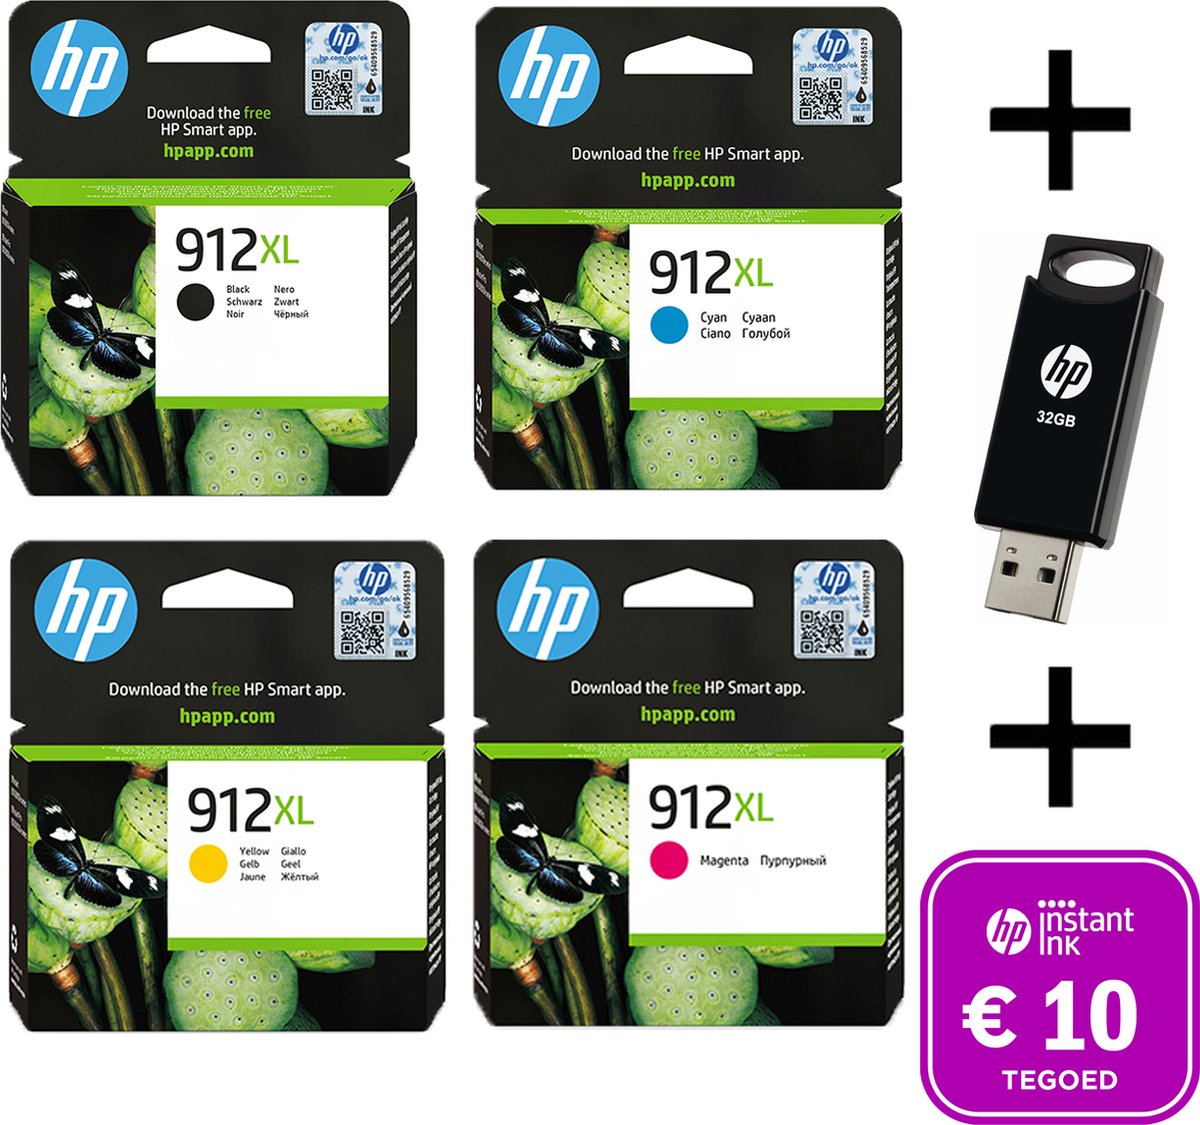 HP 912 XL Multi Bundel - Met Gratis 32 GB USB Stick & Instant Ink tegoed